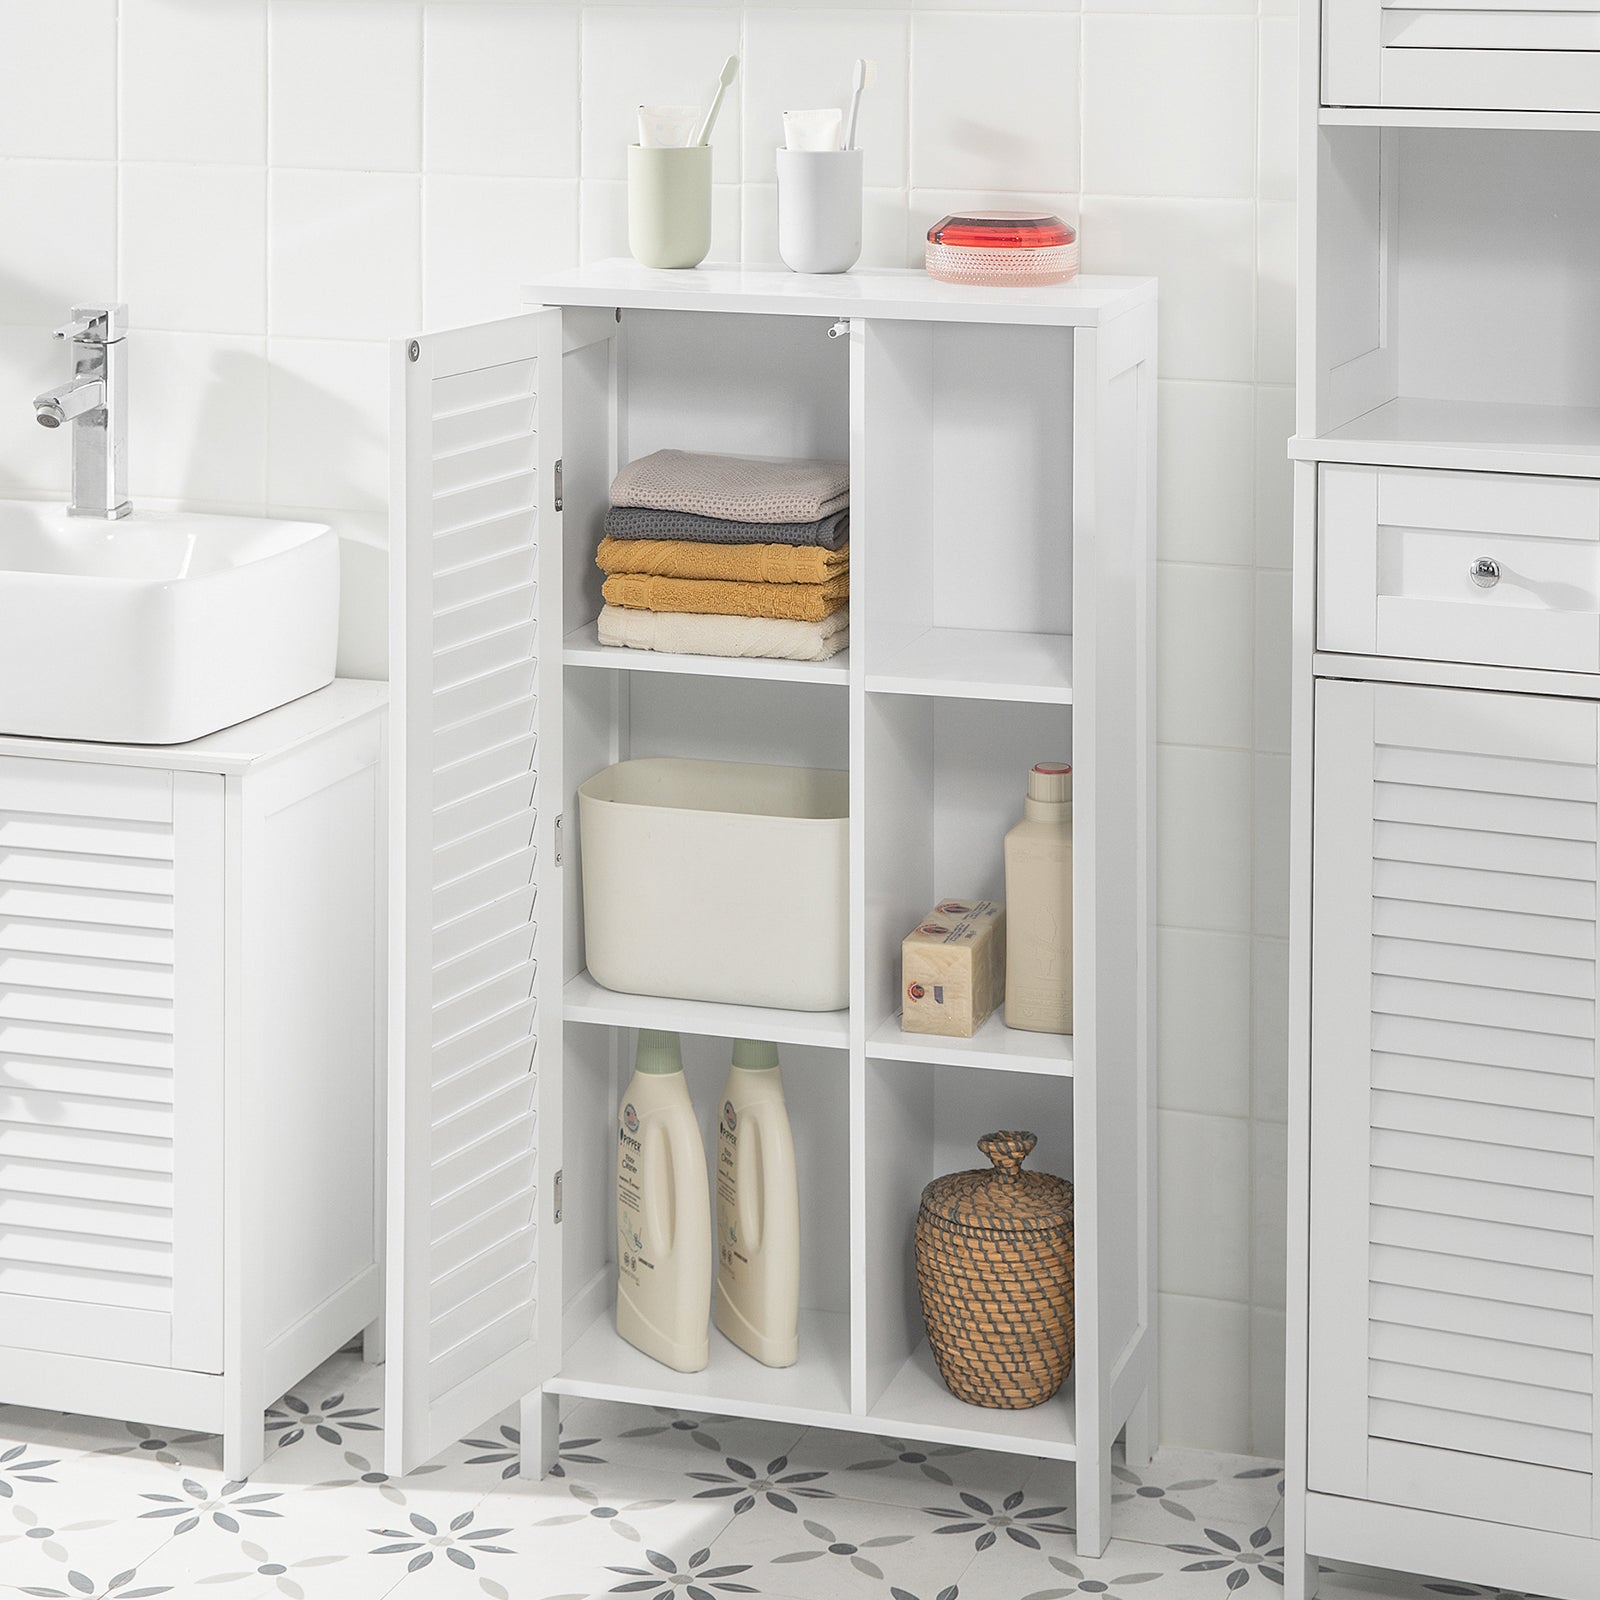 SoBuy BZR39-W Bathroom Storage Cabinet Cupboard with 3 Shelves and 1 Shutter Door